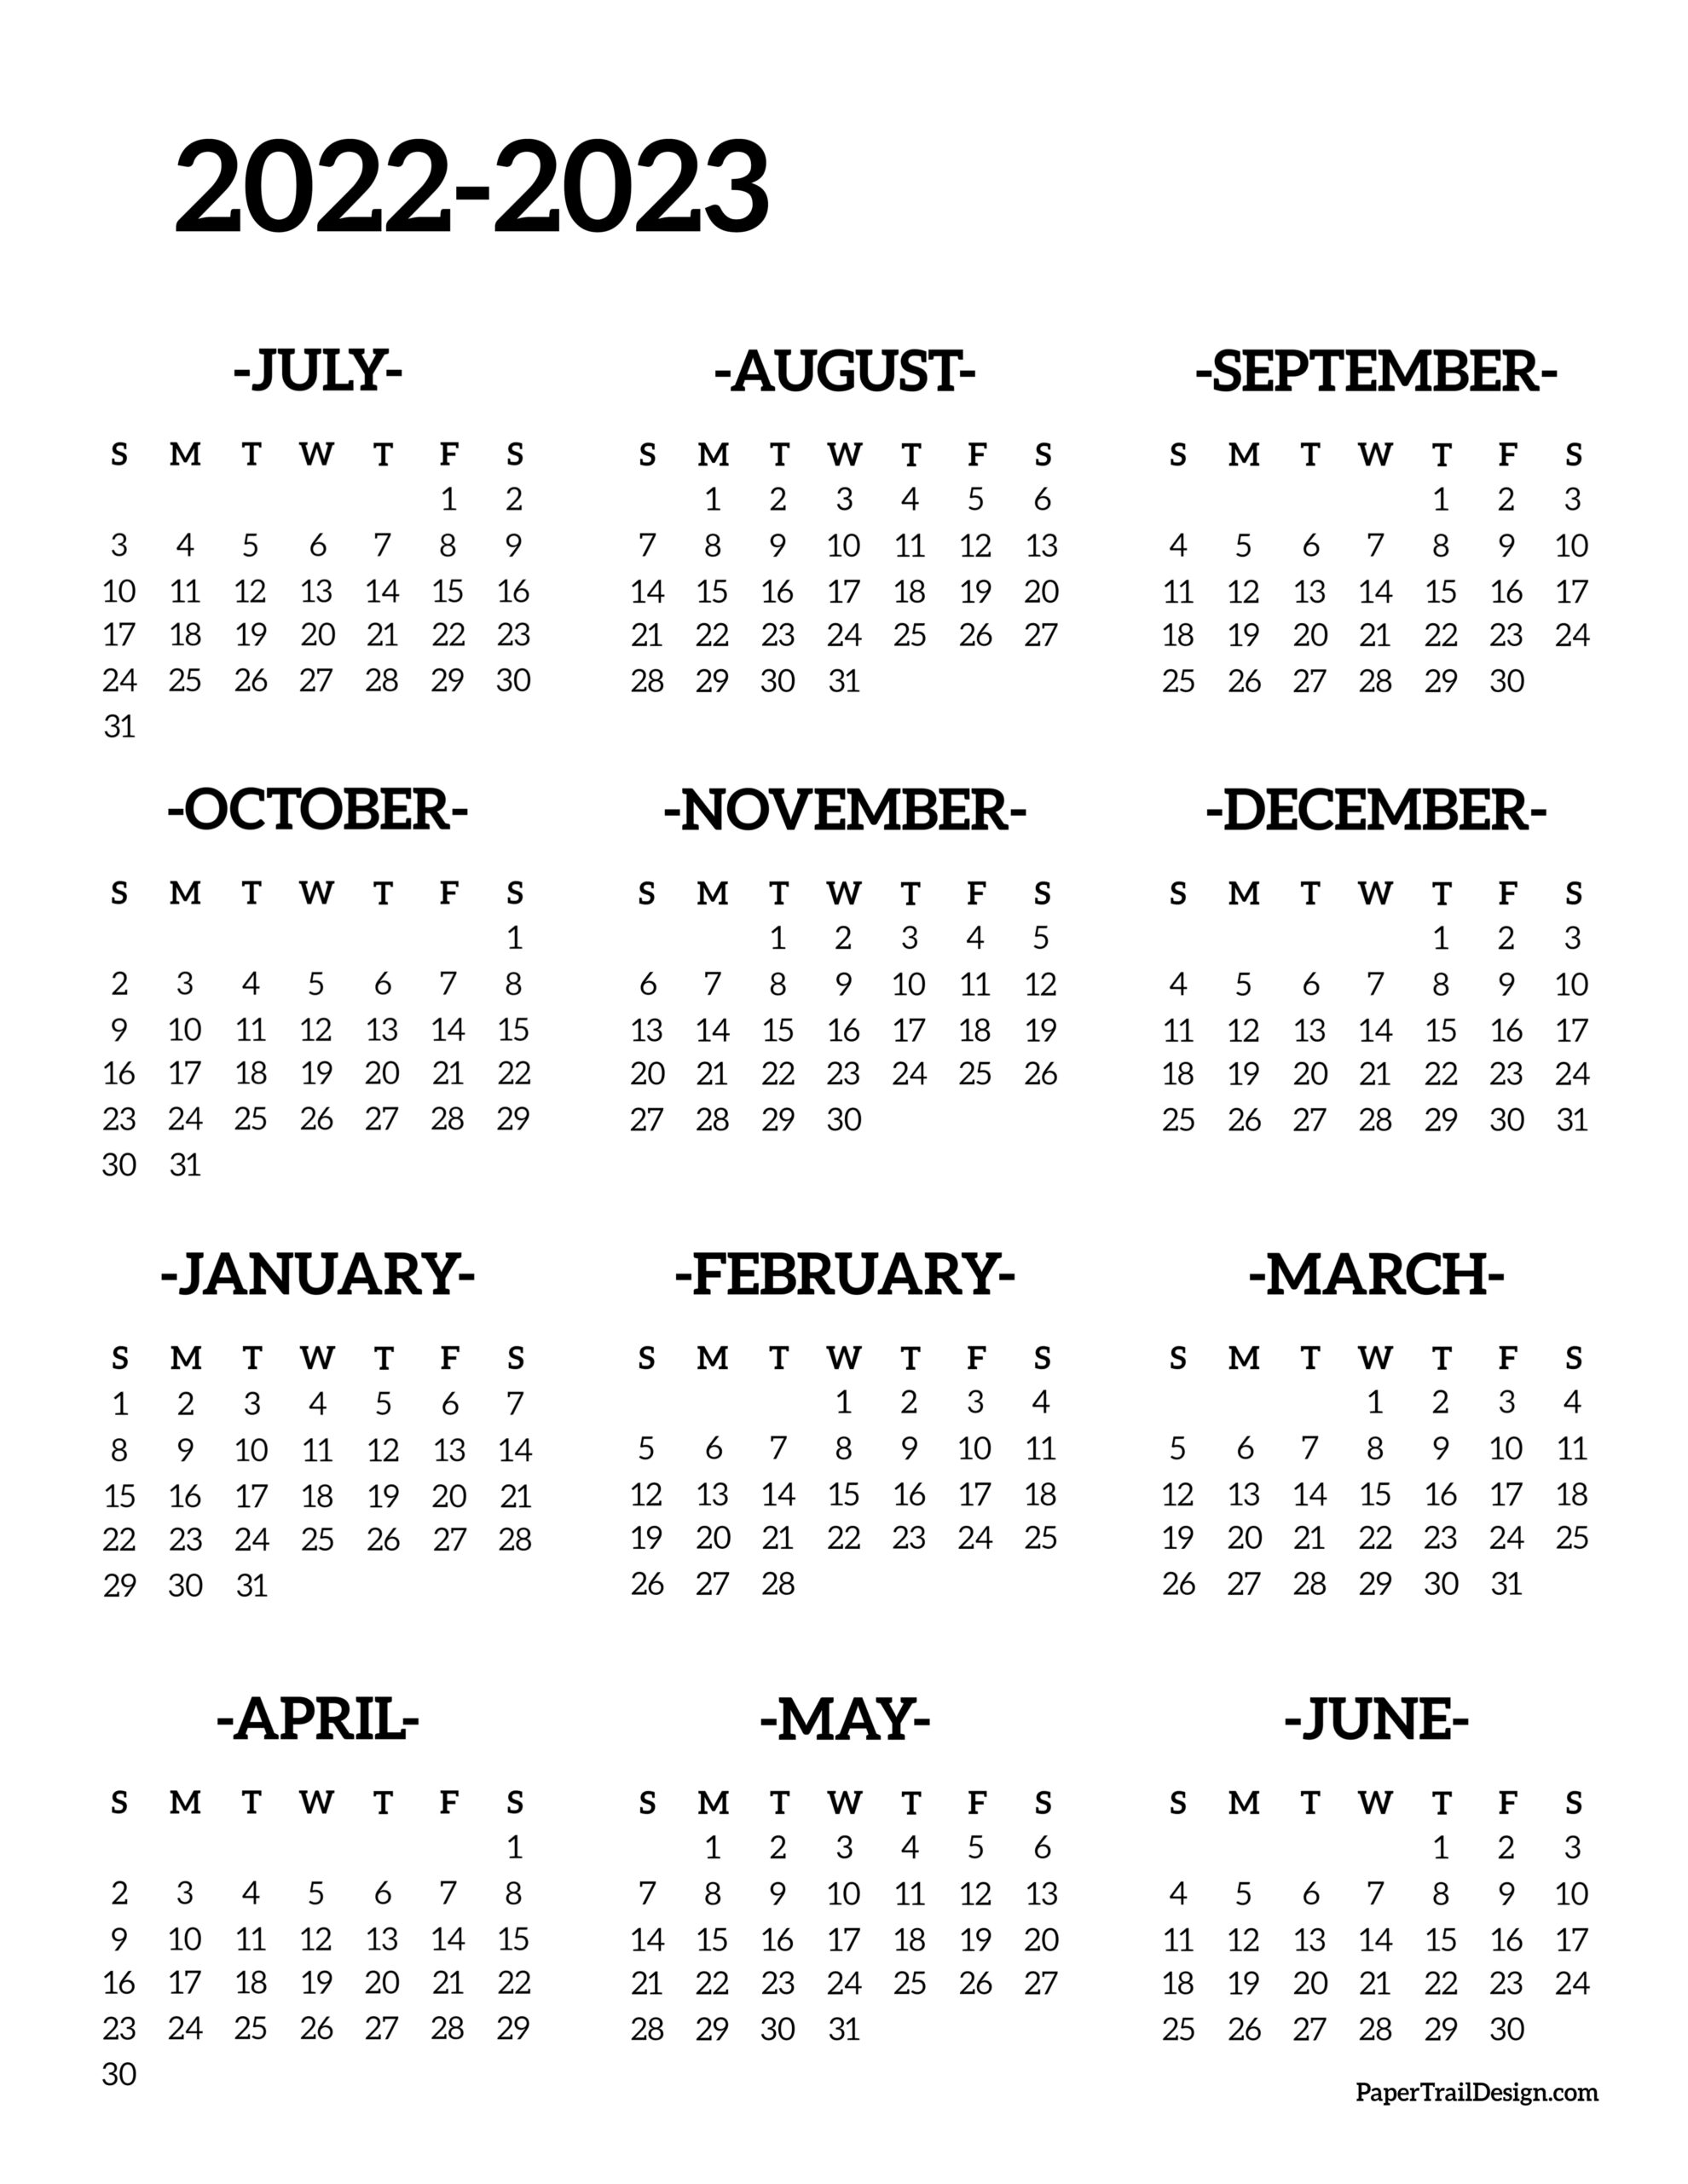 Free Printable 2022 2023 Calendar 2022-2023 School Year Calendar Free Printable - Paper Trail Design